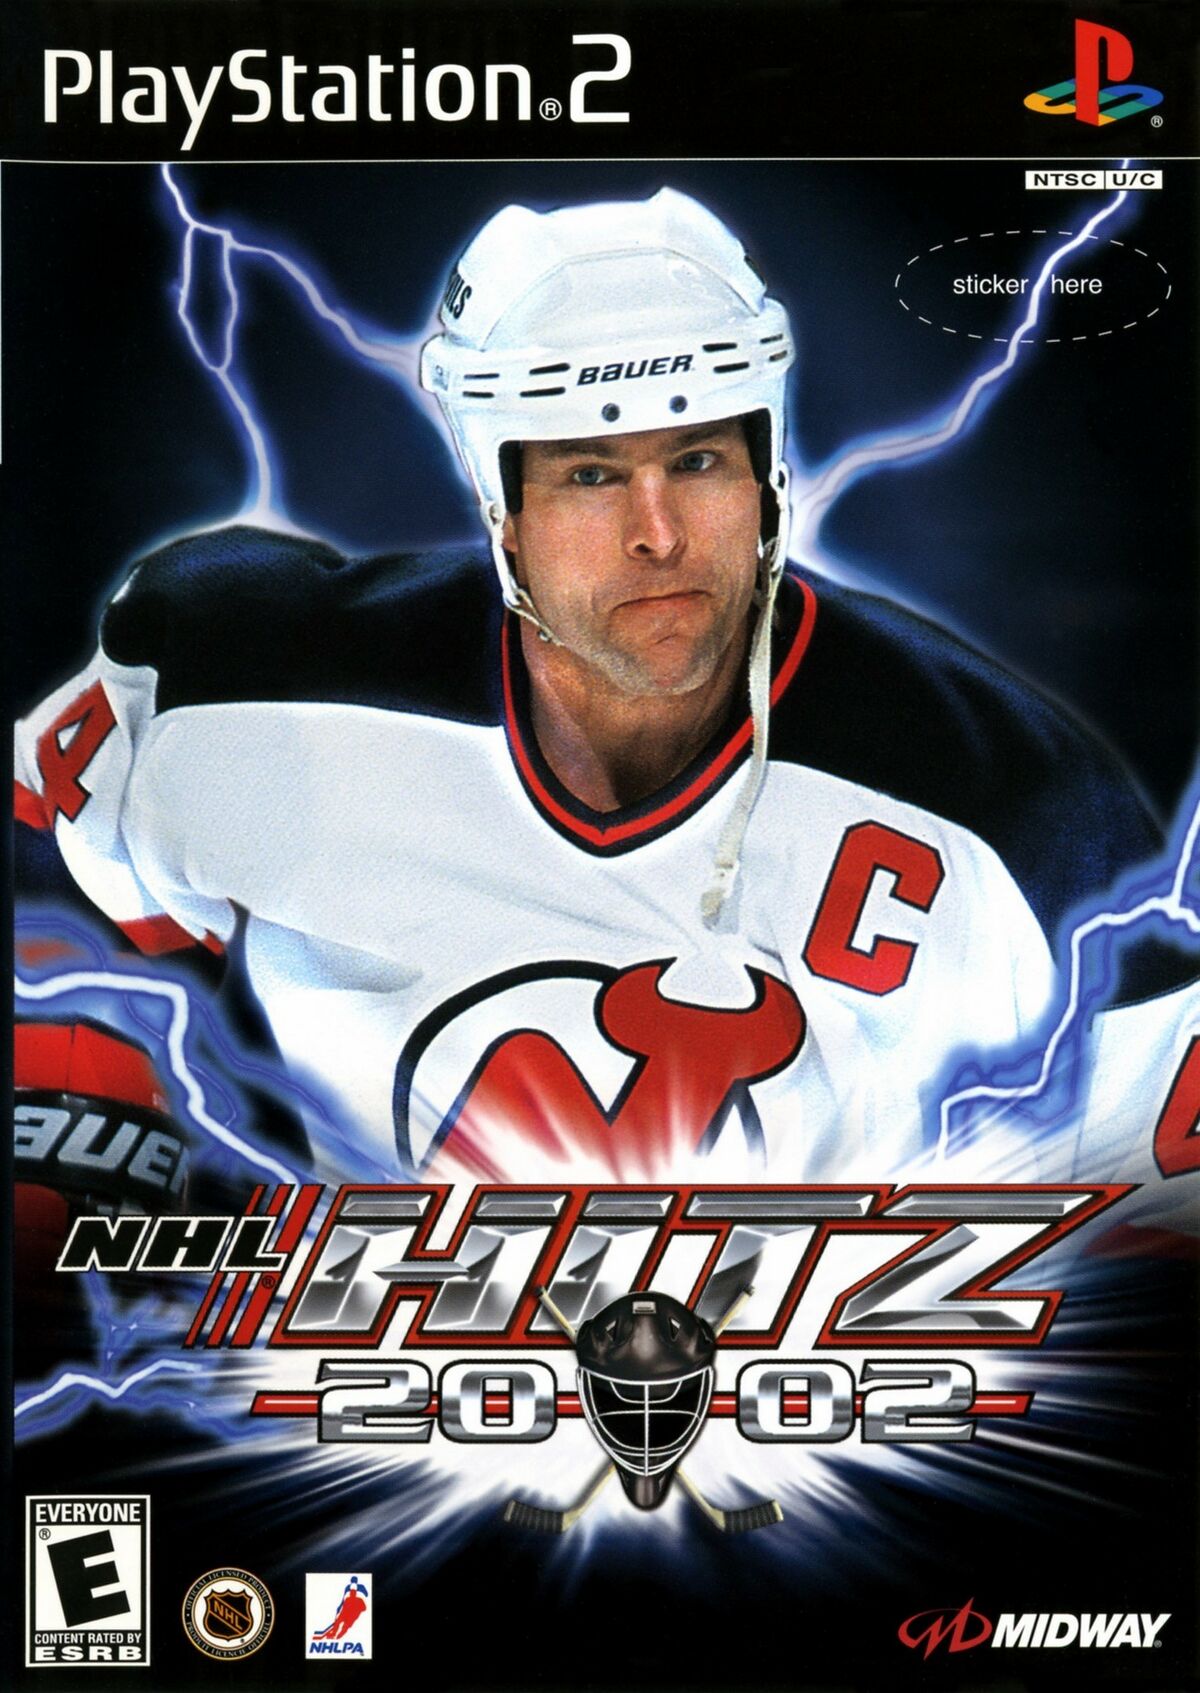 NHL Hitz 2003 - Wikipedia